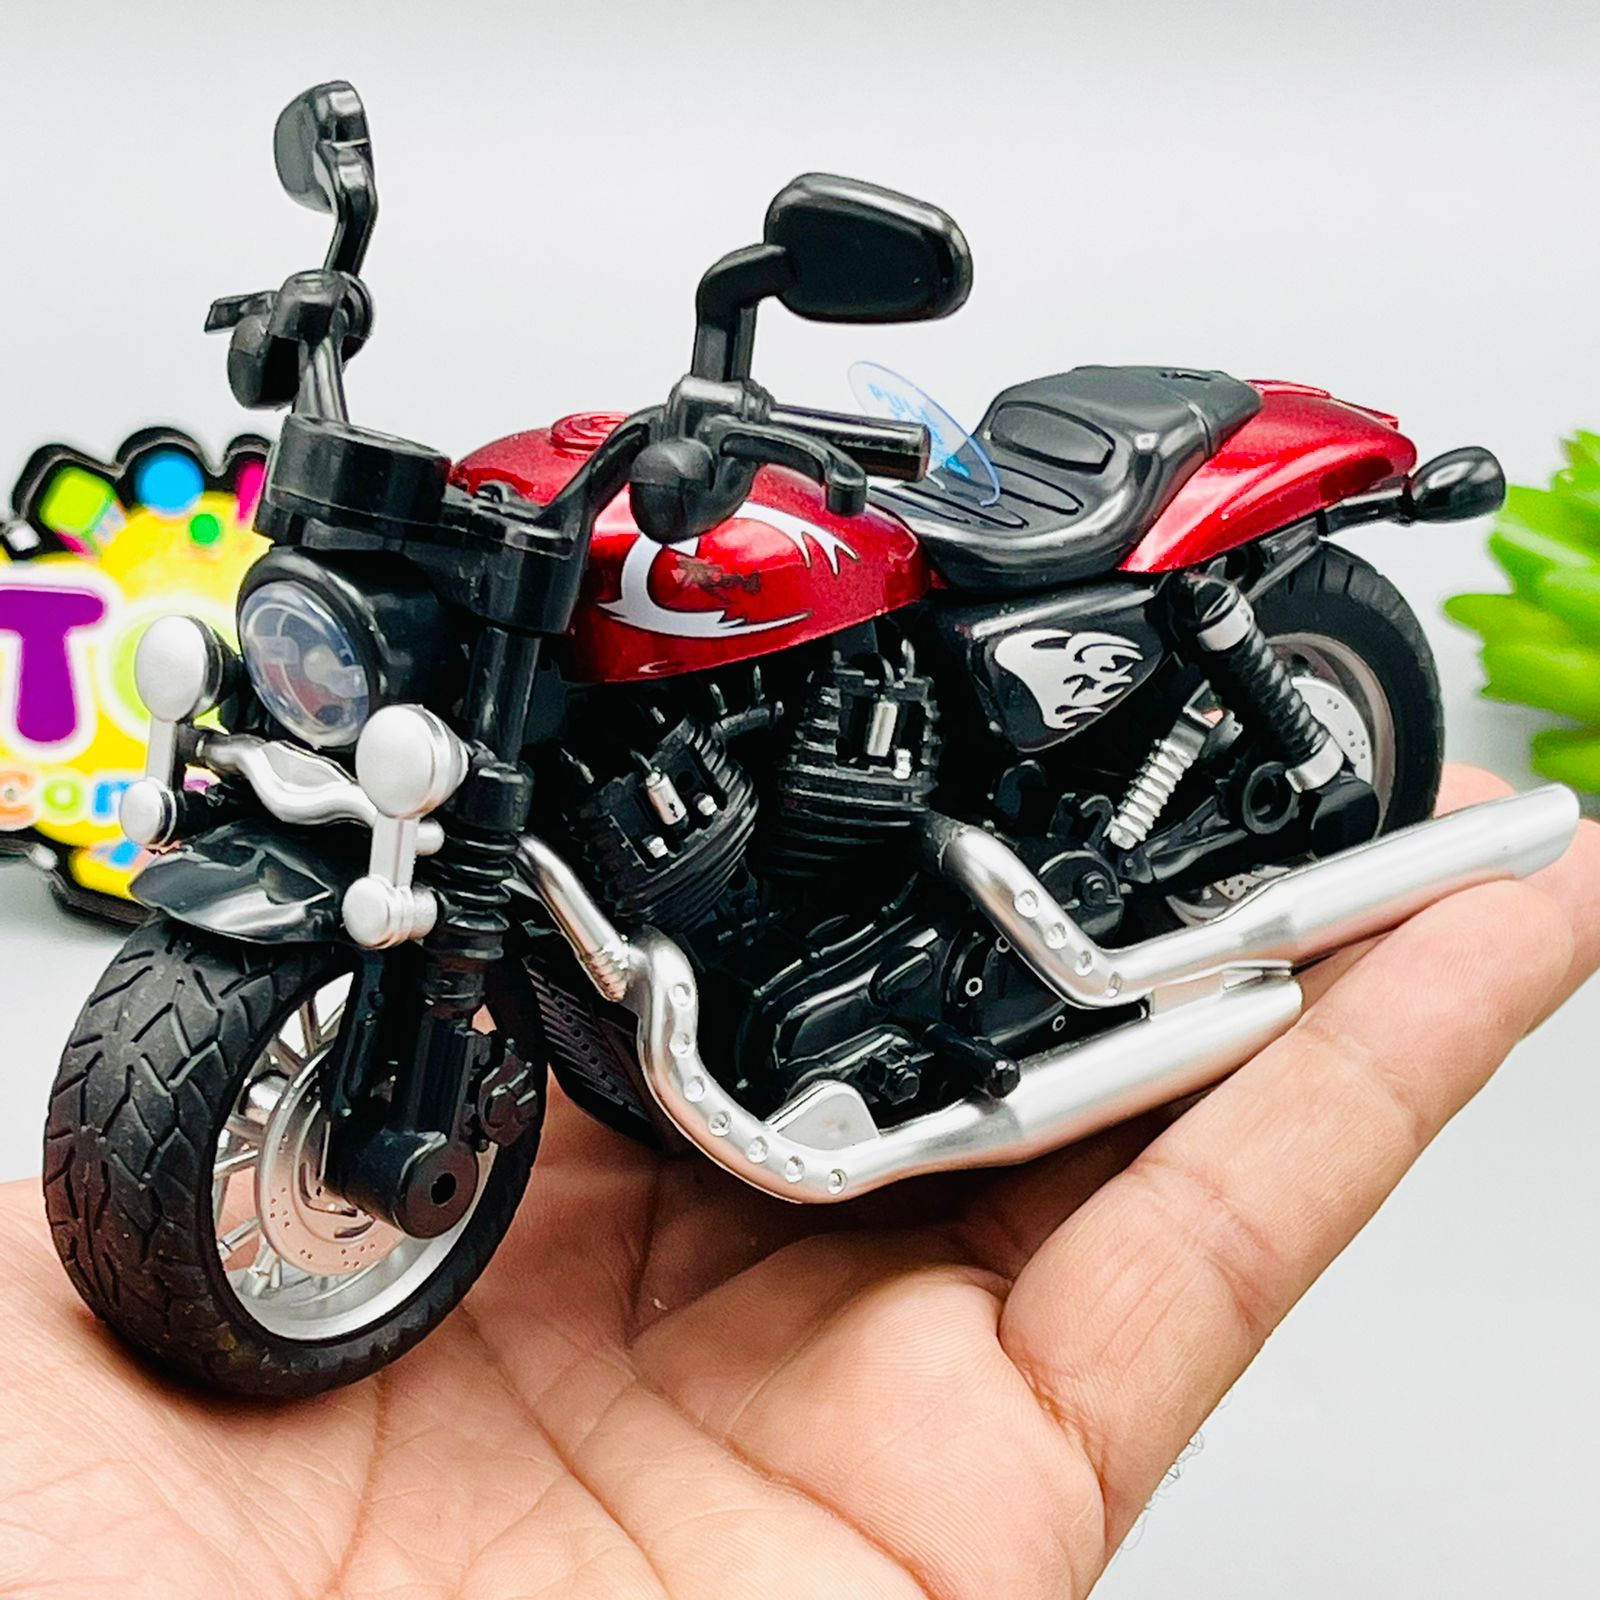 Die-Cast Motor Bike Toy For Kids Price in Pakistan